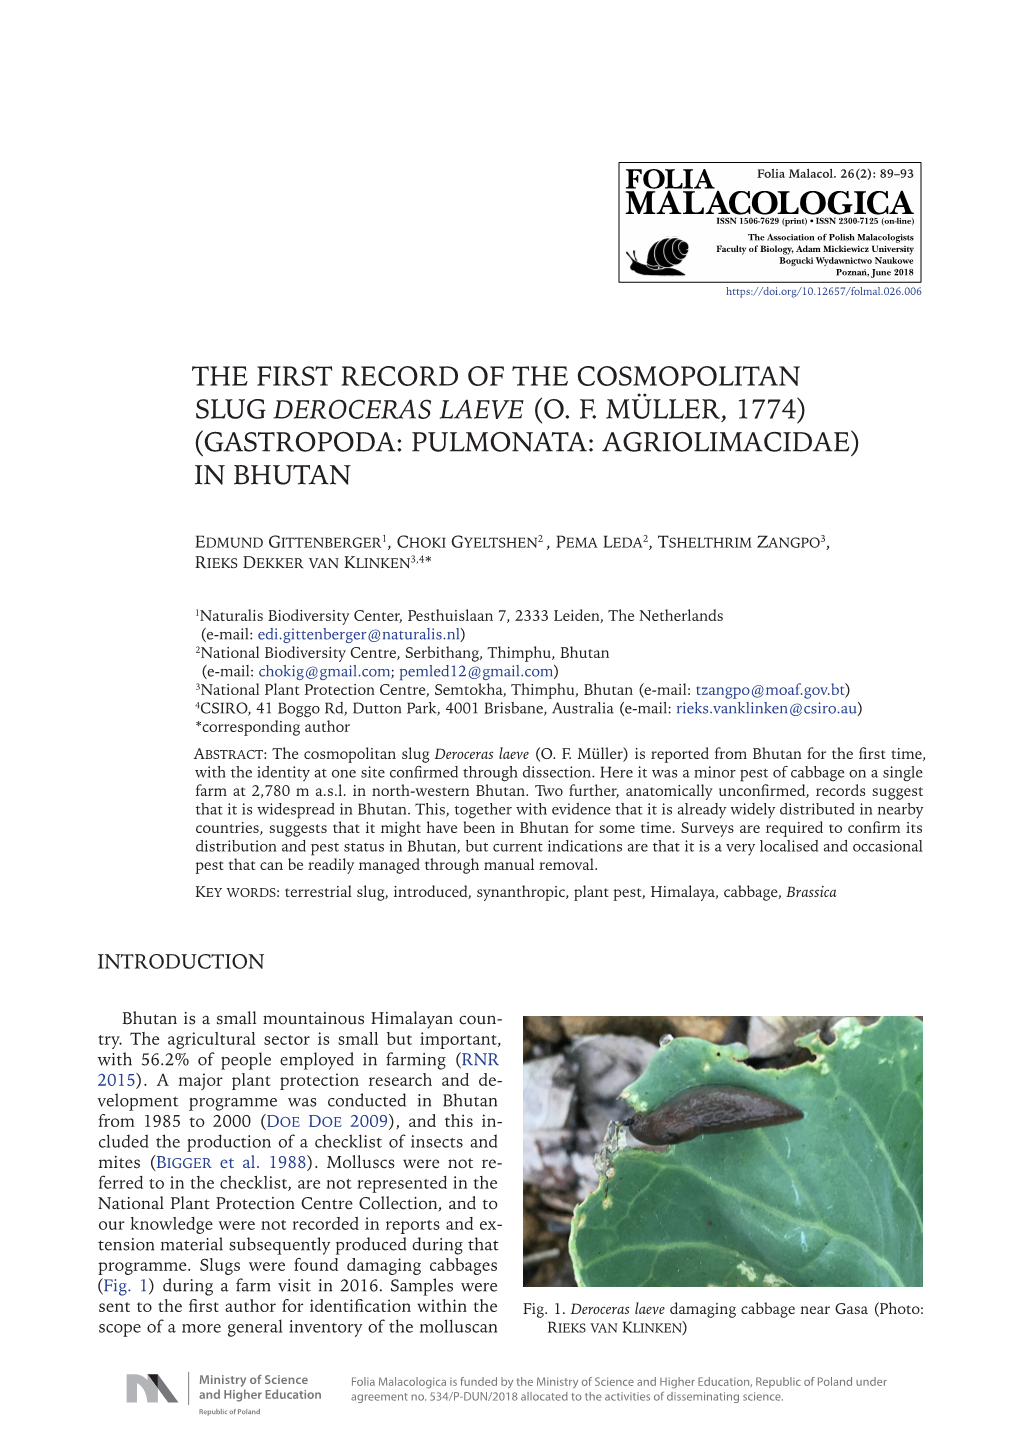 The First Record of the Cosmopolitan Slug Deroceras Laeve (O. F. Müller, 1774) (Gastropoda: Pulmonata: Agriolimacidae) in Bhutan